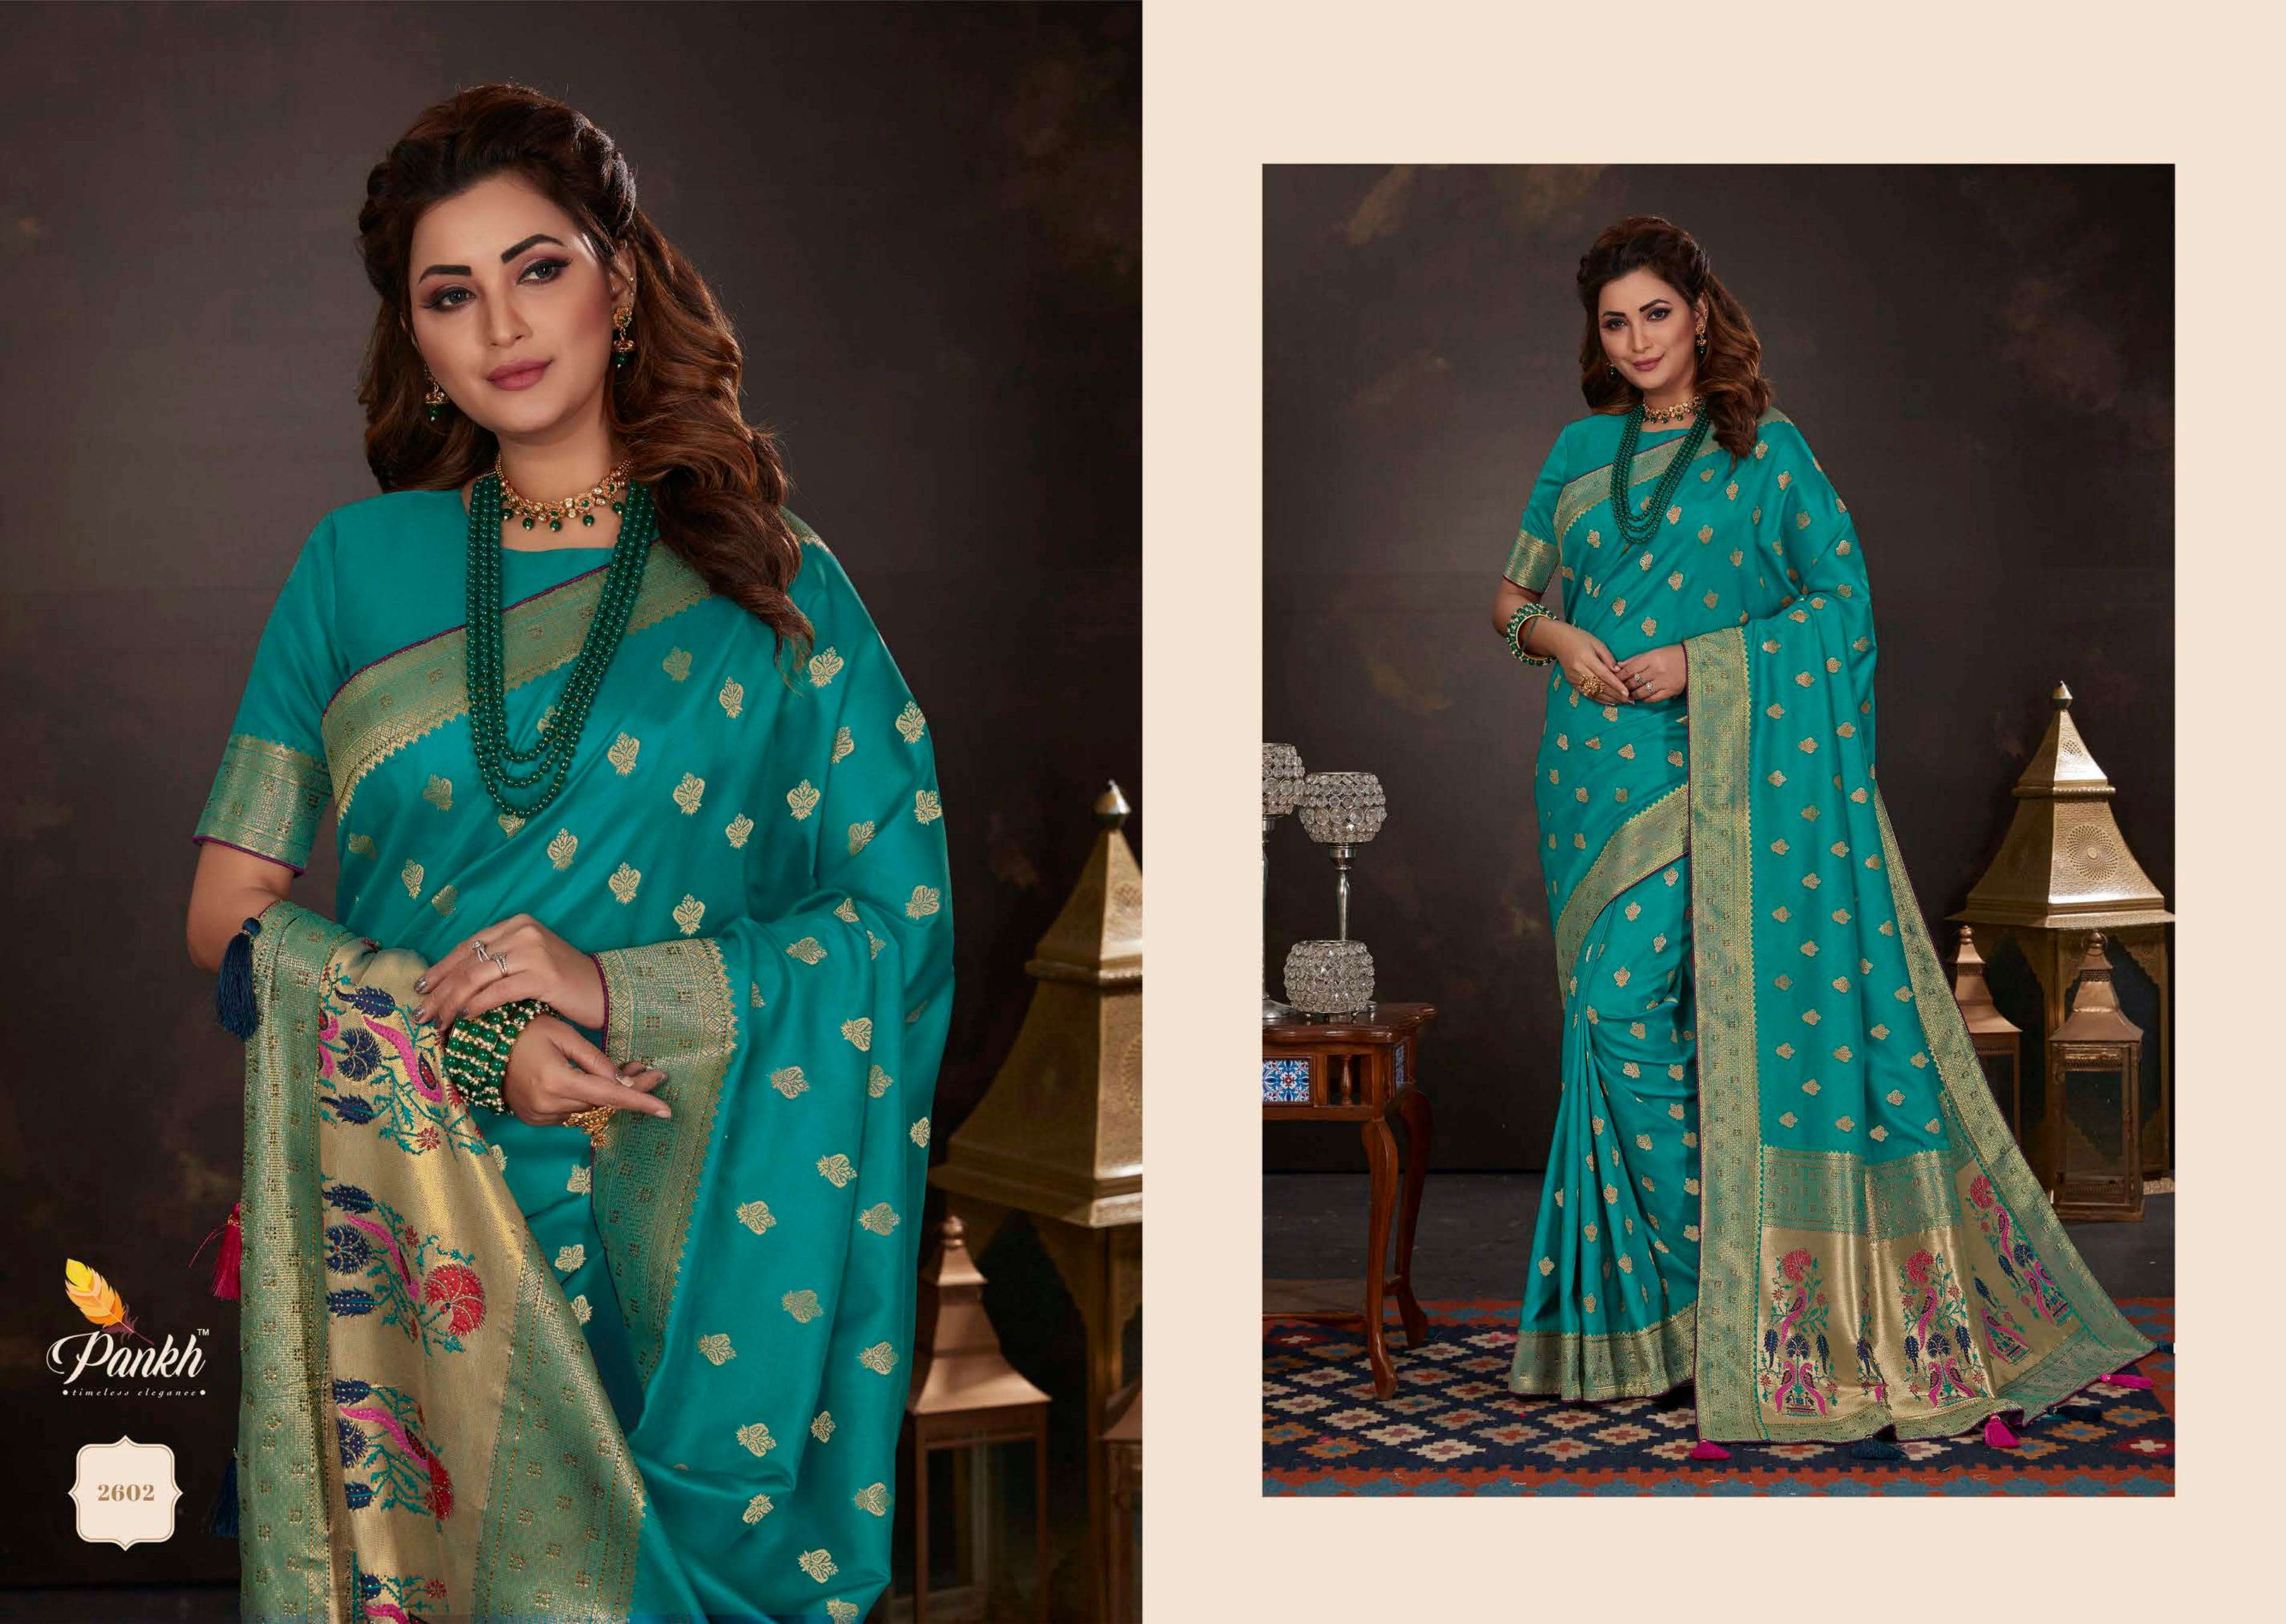 Pankh Pari Silk Series 2601-2607 Silk Saree Wholesale Rate In Surat - Saidharanx 